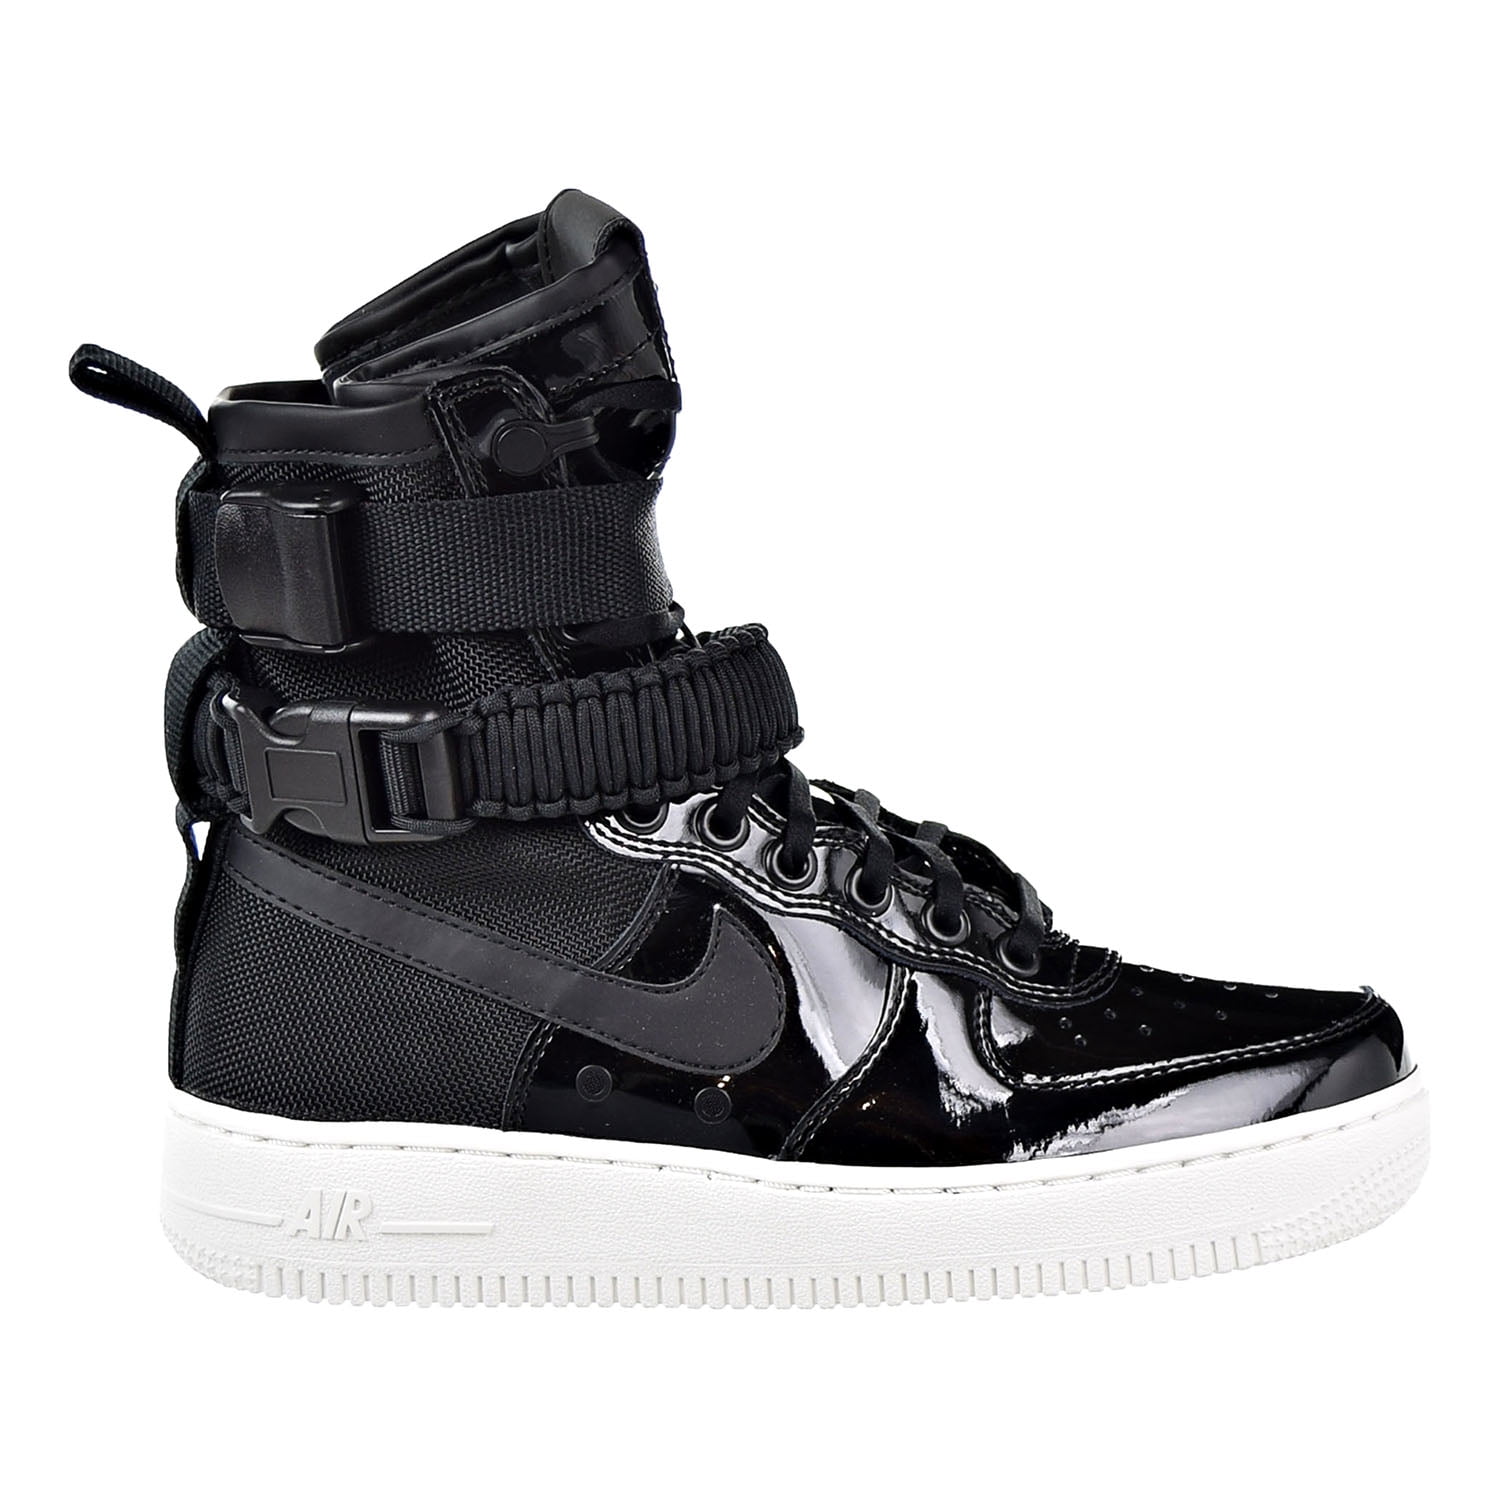 Nike SF Air Force Premium Women's Shoes Black / Reflect Silver / Black aj0963-001 - Walmart.com